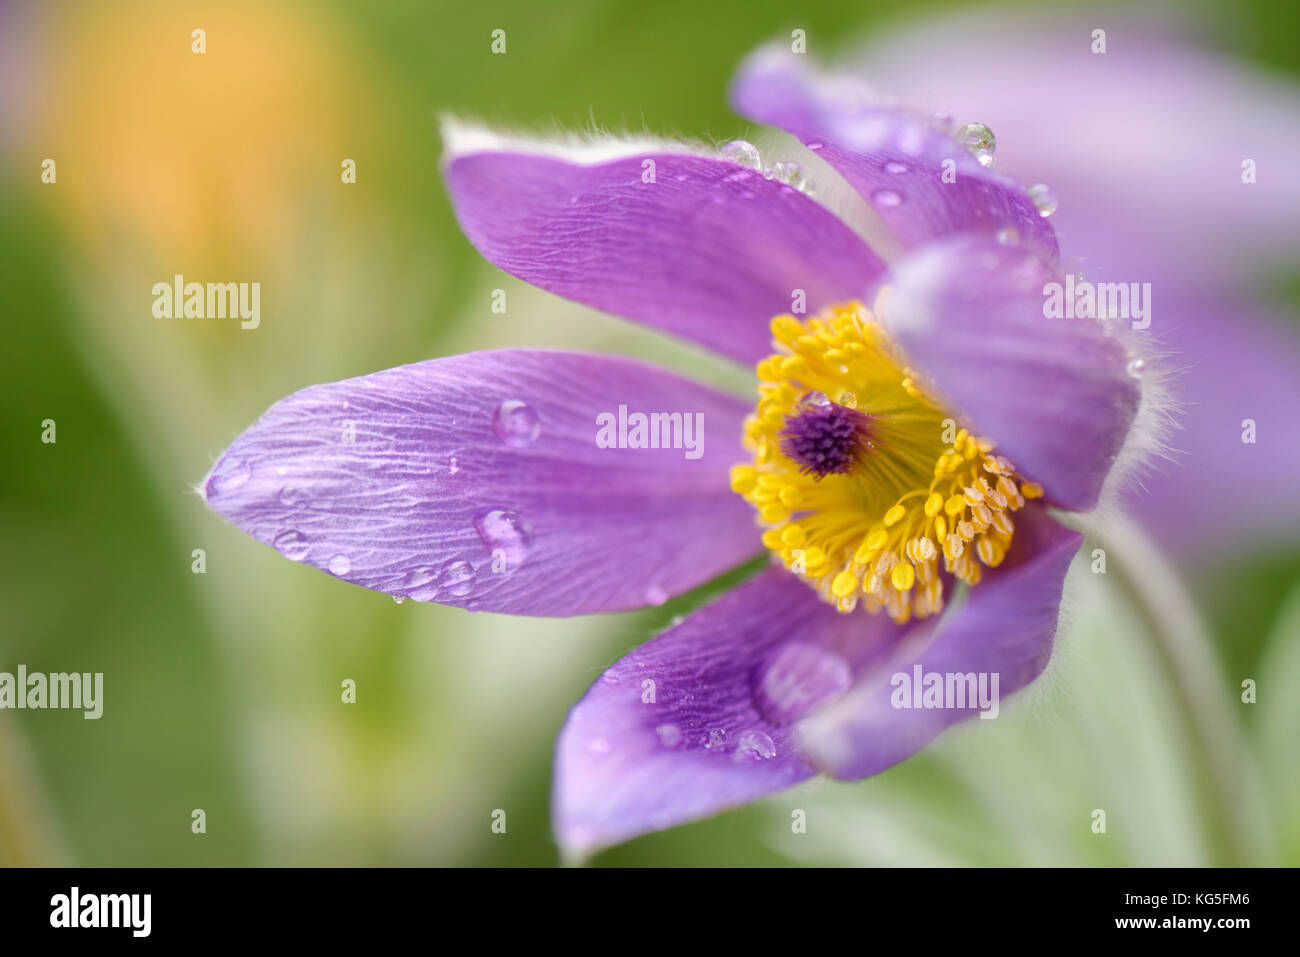 common pasque flower, Pulsatilla vulgaris, blossom, close-up Stock Photo